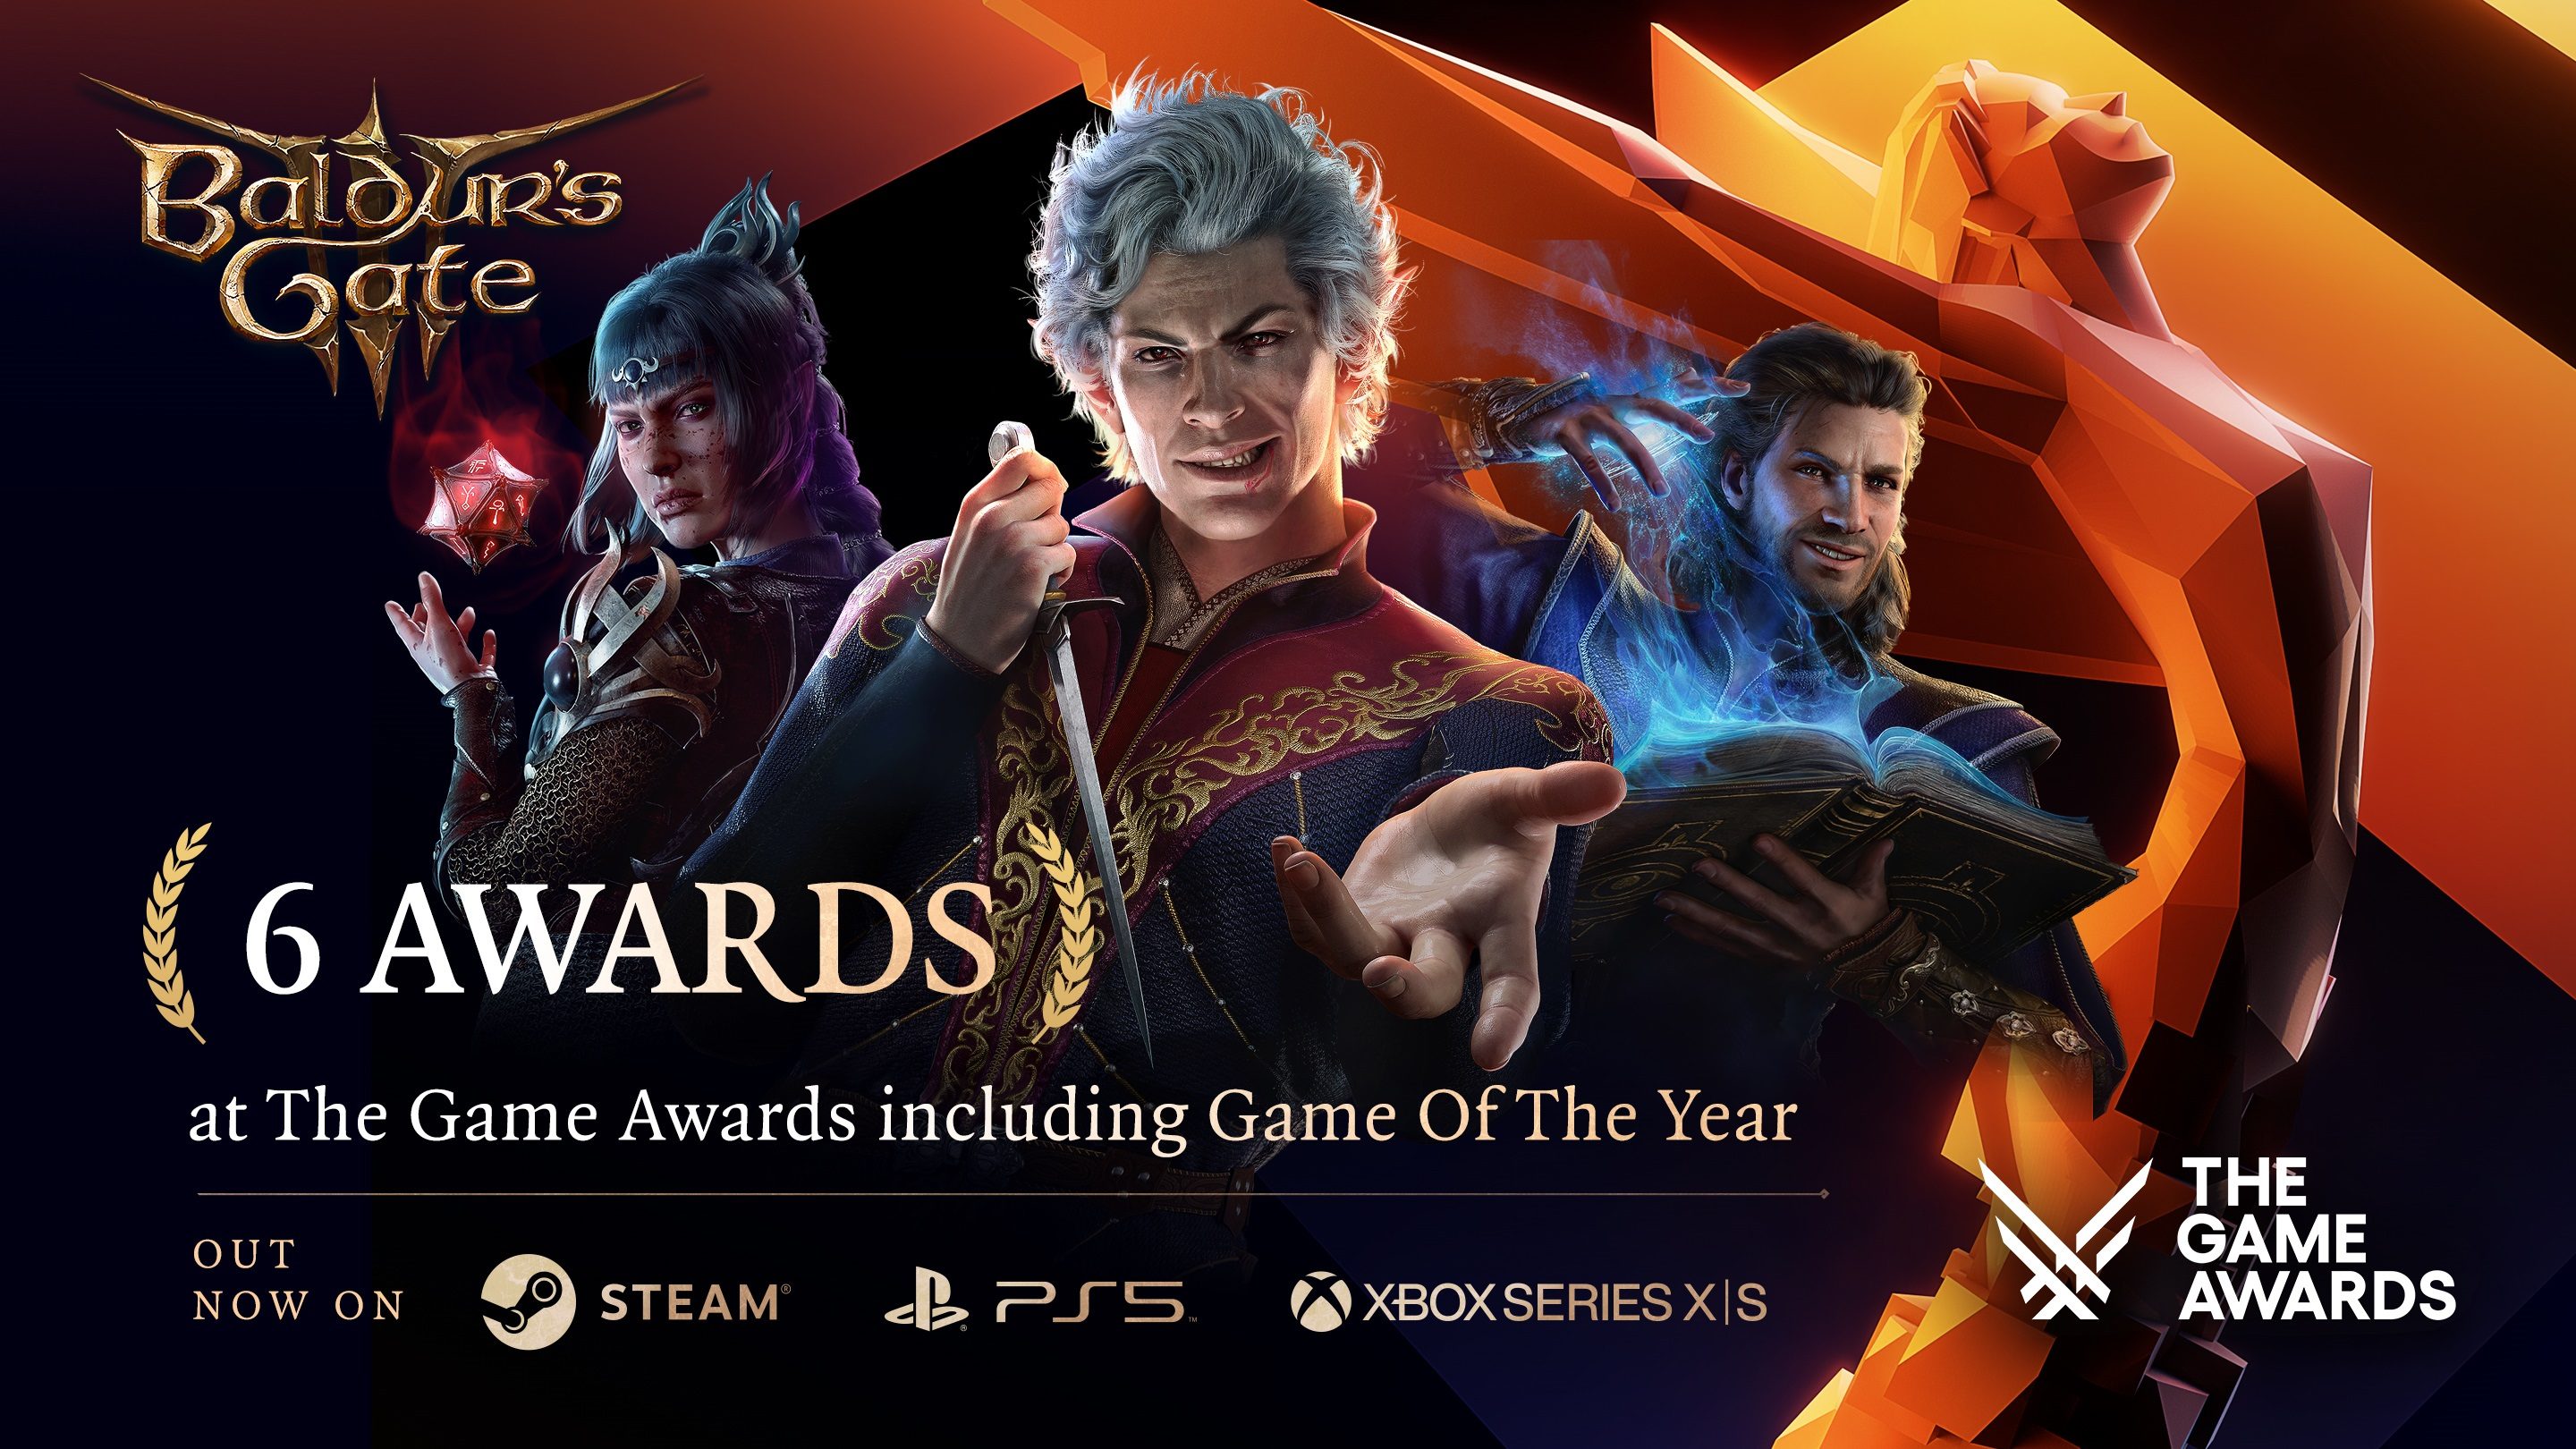 The Game Awards 2023 nominees: BG3, Zelda, Resident Evil 4, and more